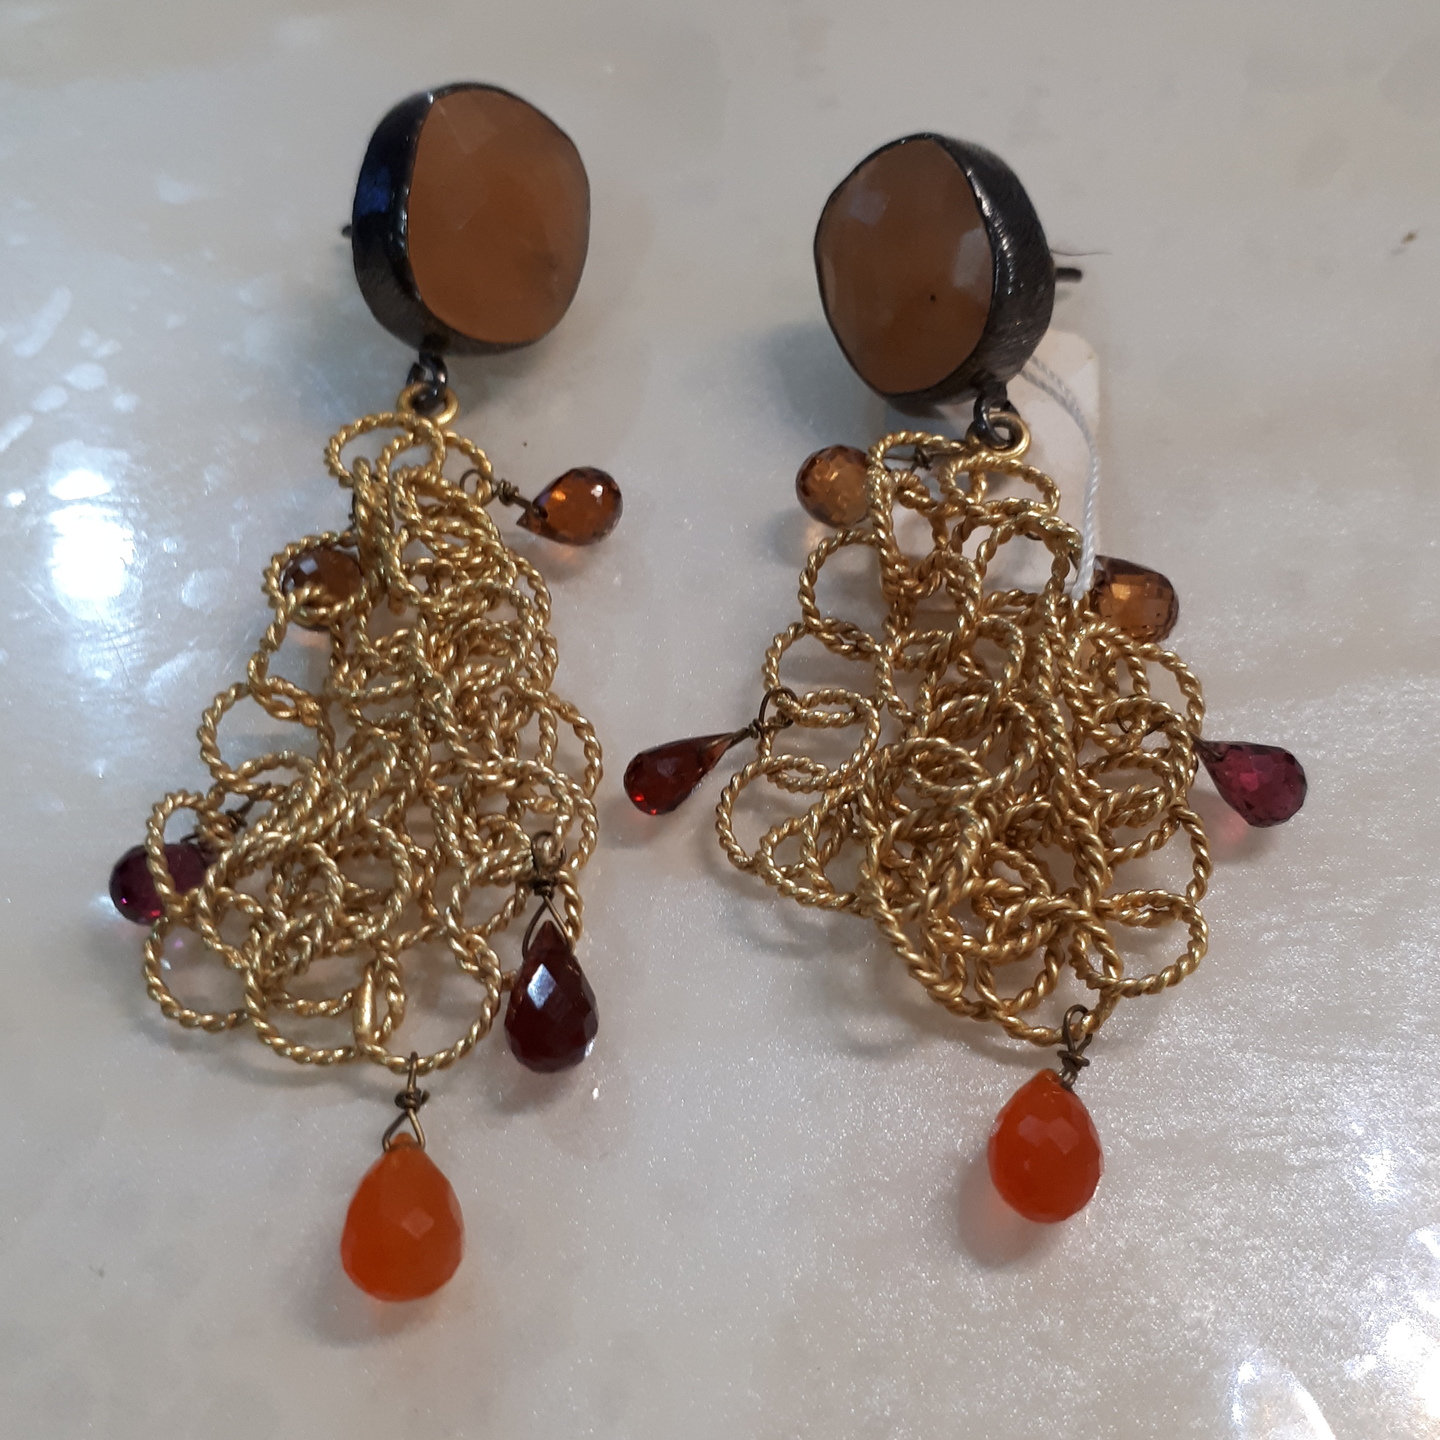 Agate + Tourmaline earrings